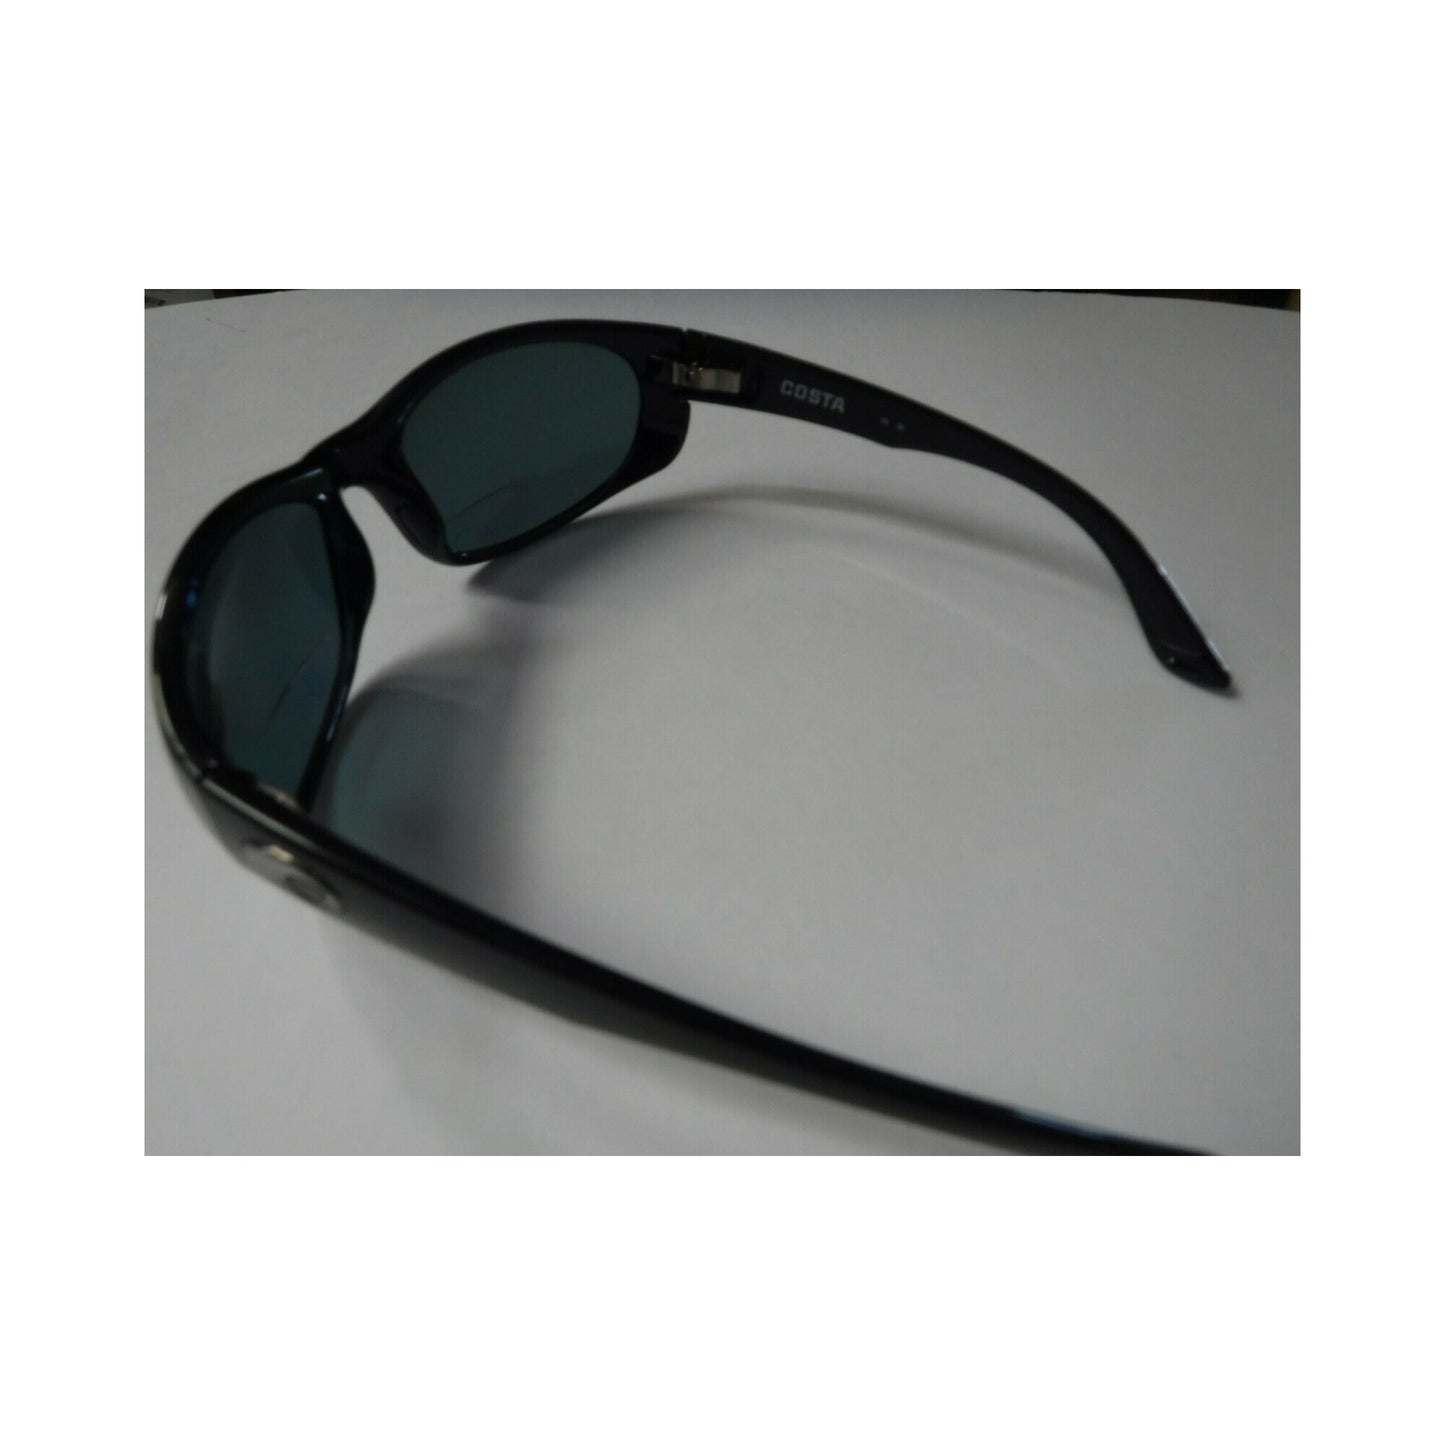 New Authentic Costa Howler Reader Sunglasses Shiny Black/Gray Lens 2.50